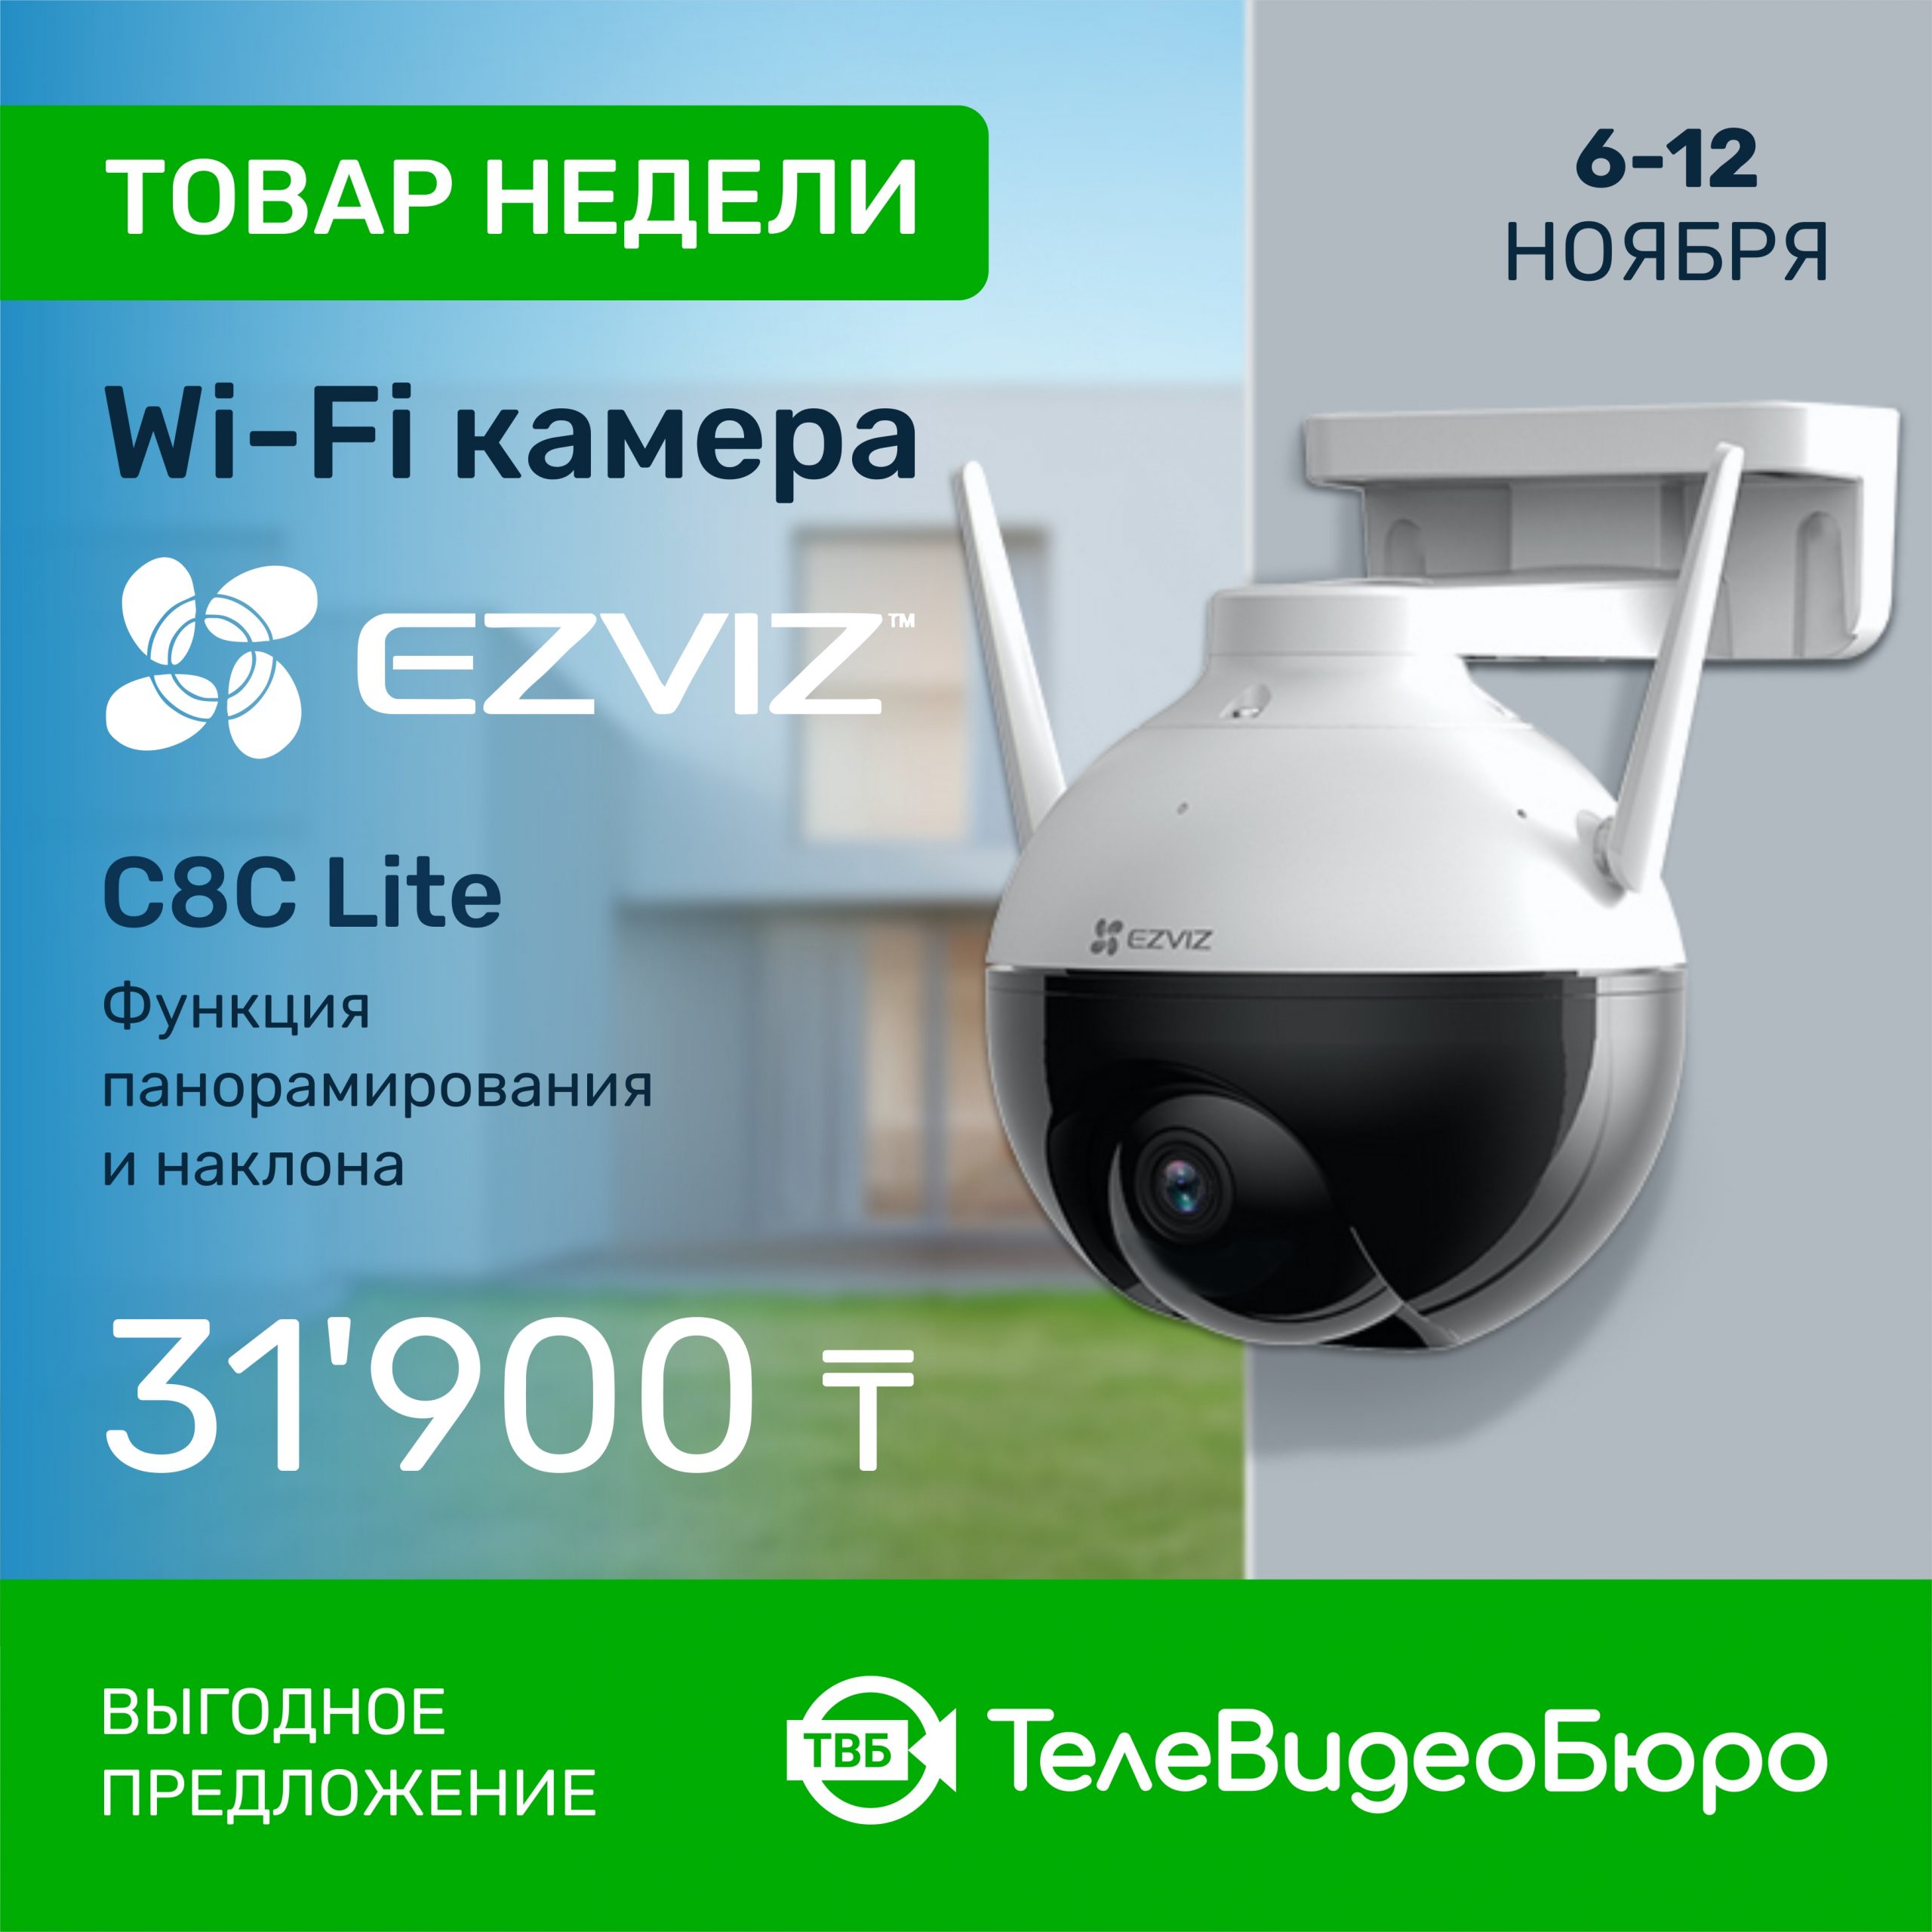 Товар Недели в Магазине Систем Безопасности “ТелеВидеоБюро” – WiFi<br>Камера Ezviz С8C!